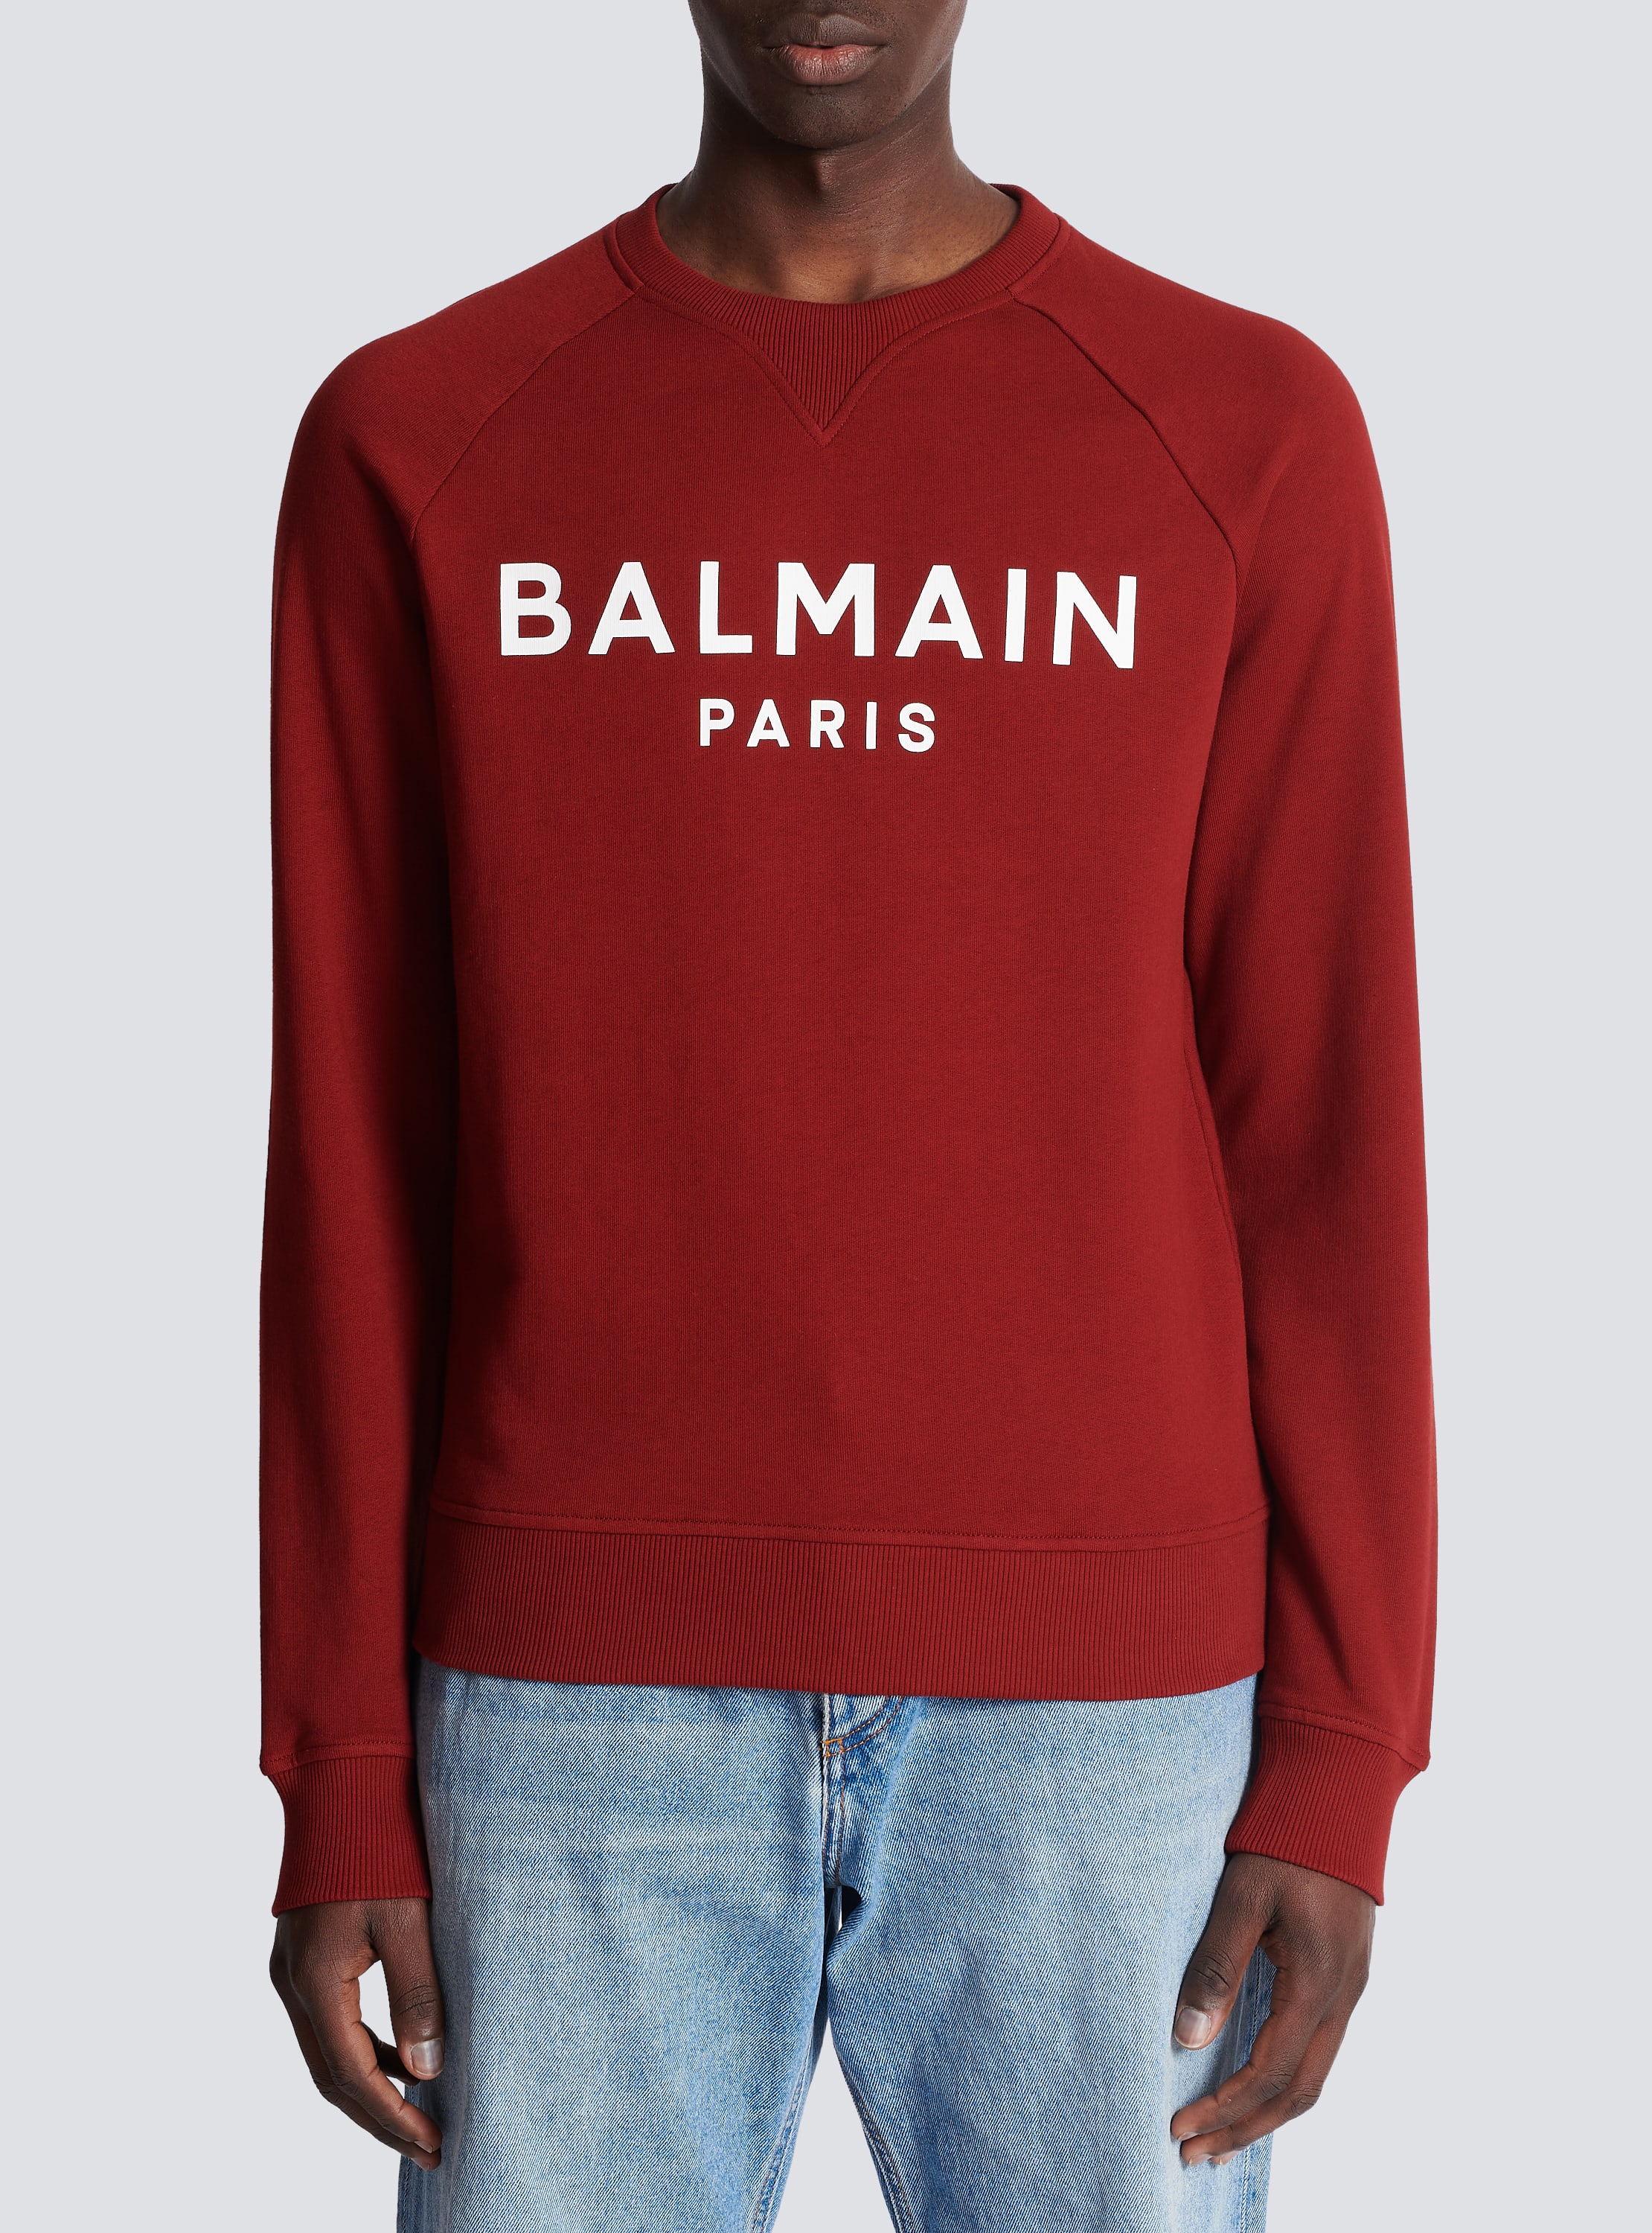 Balmain Paris sweatshirt - |